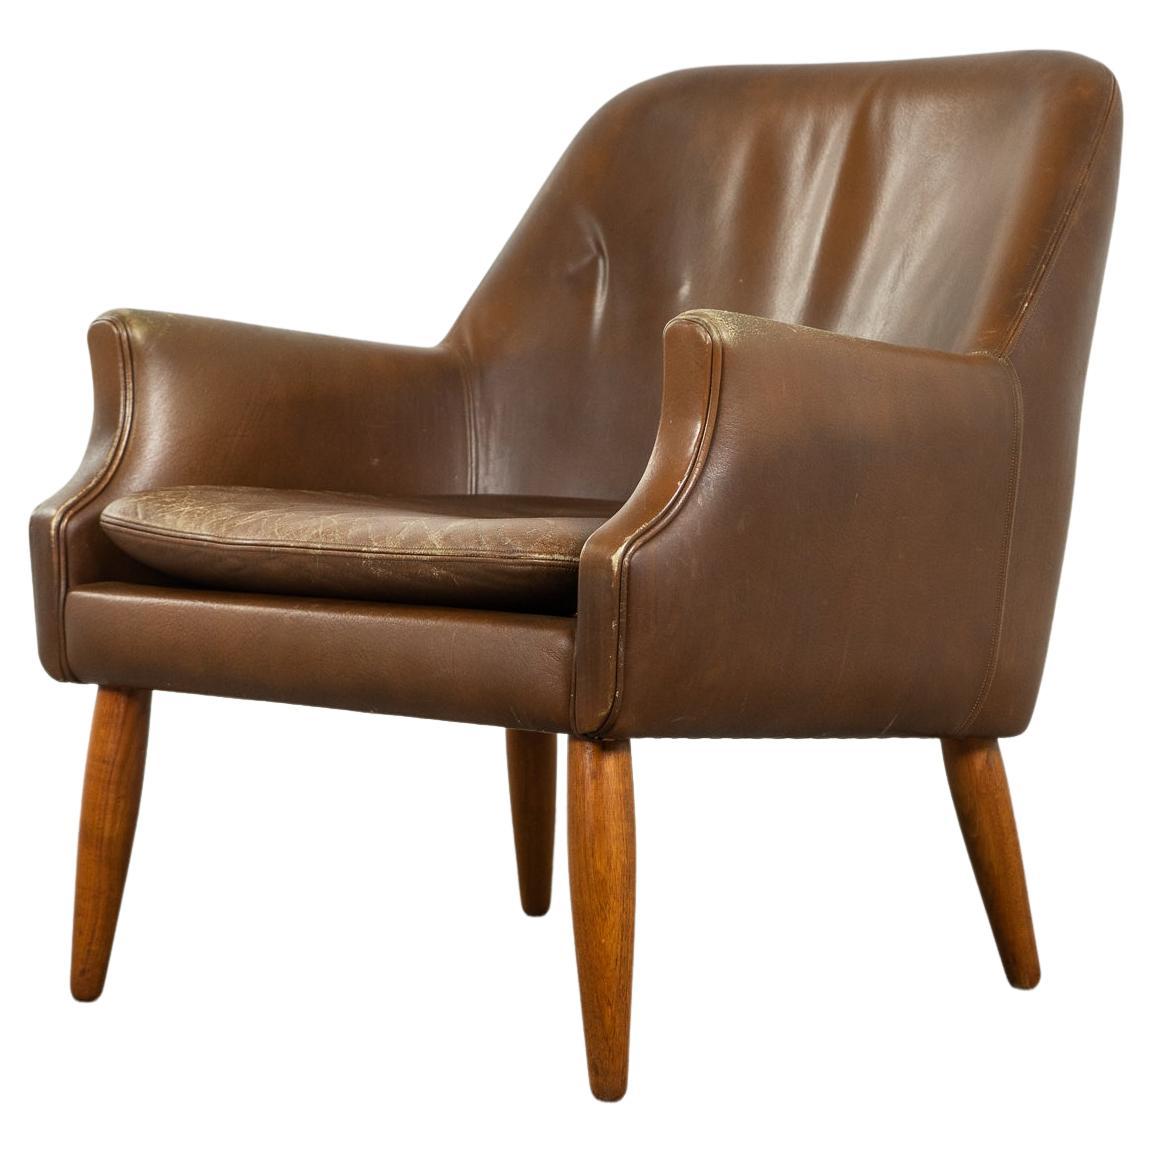 Danish Mid-Century Modern Leather & Teak Lounge Chair